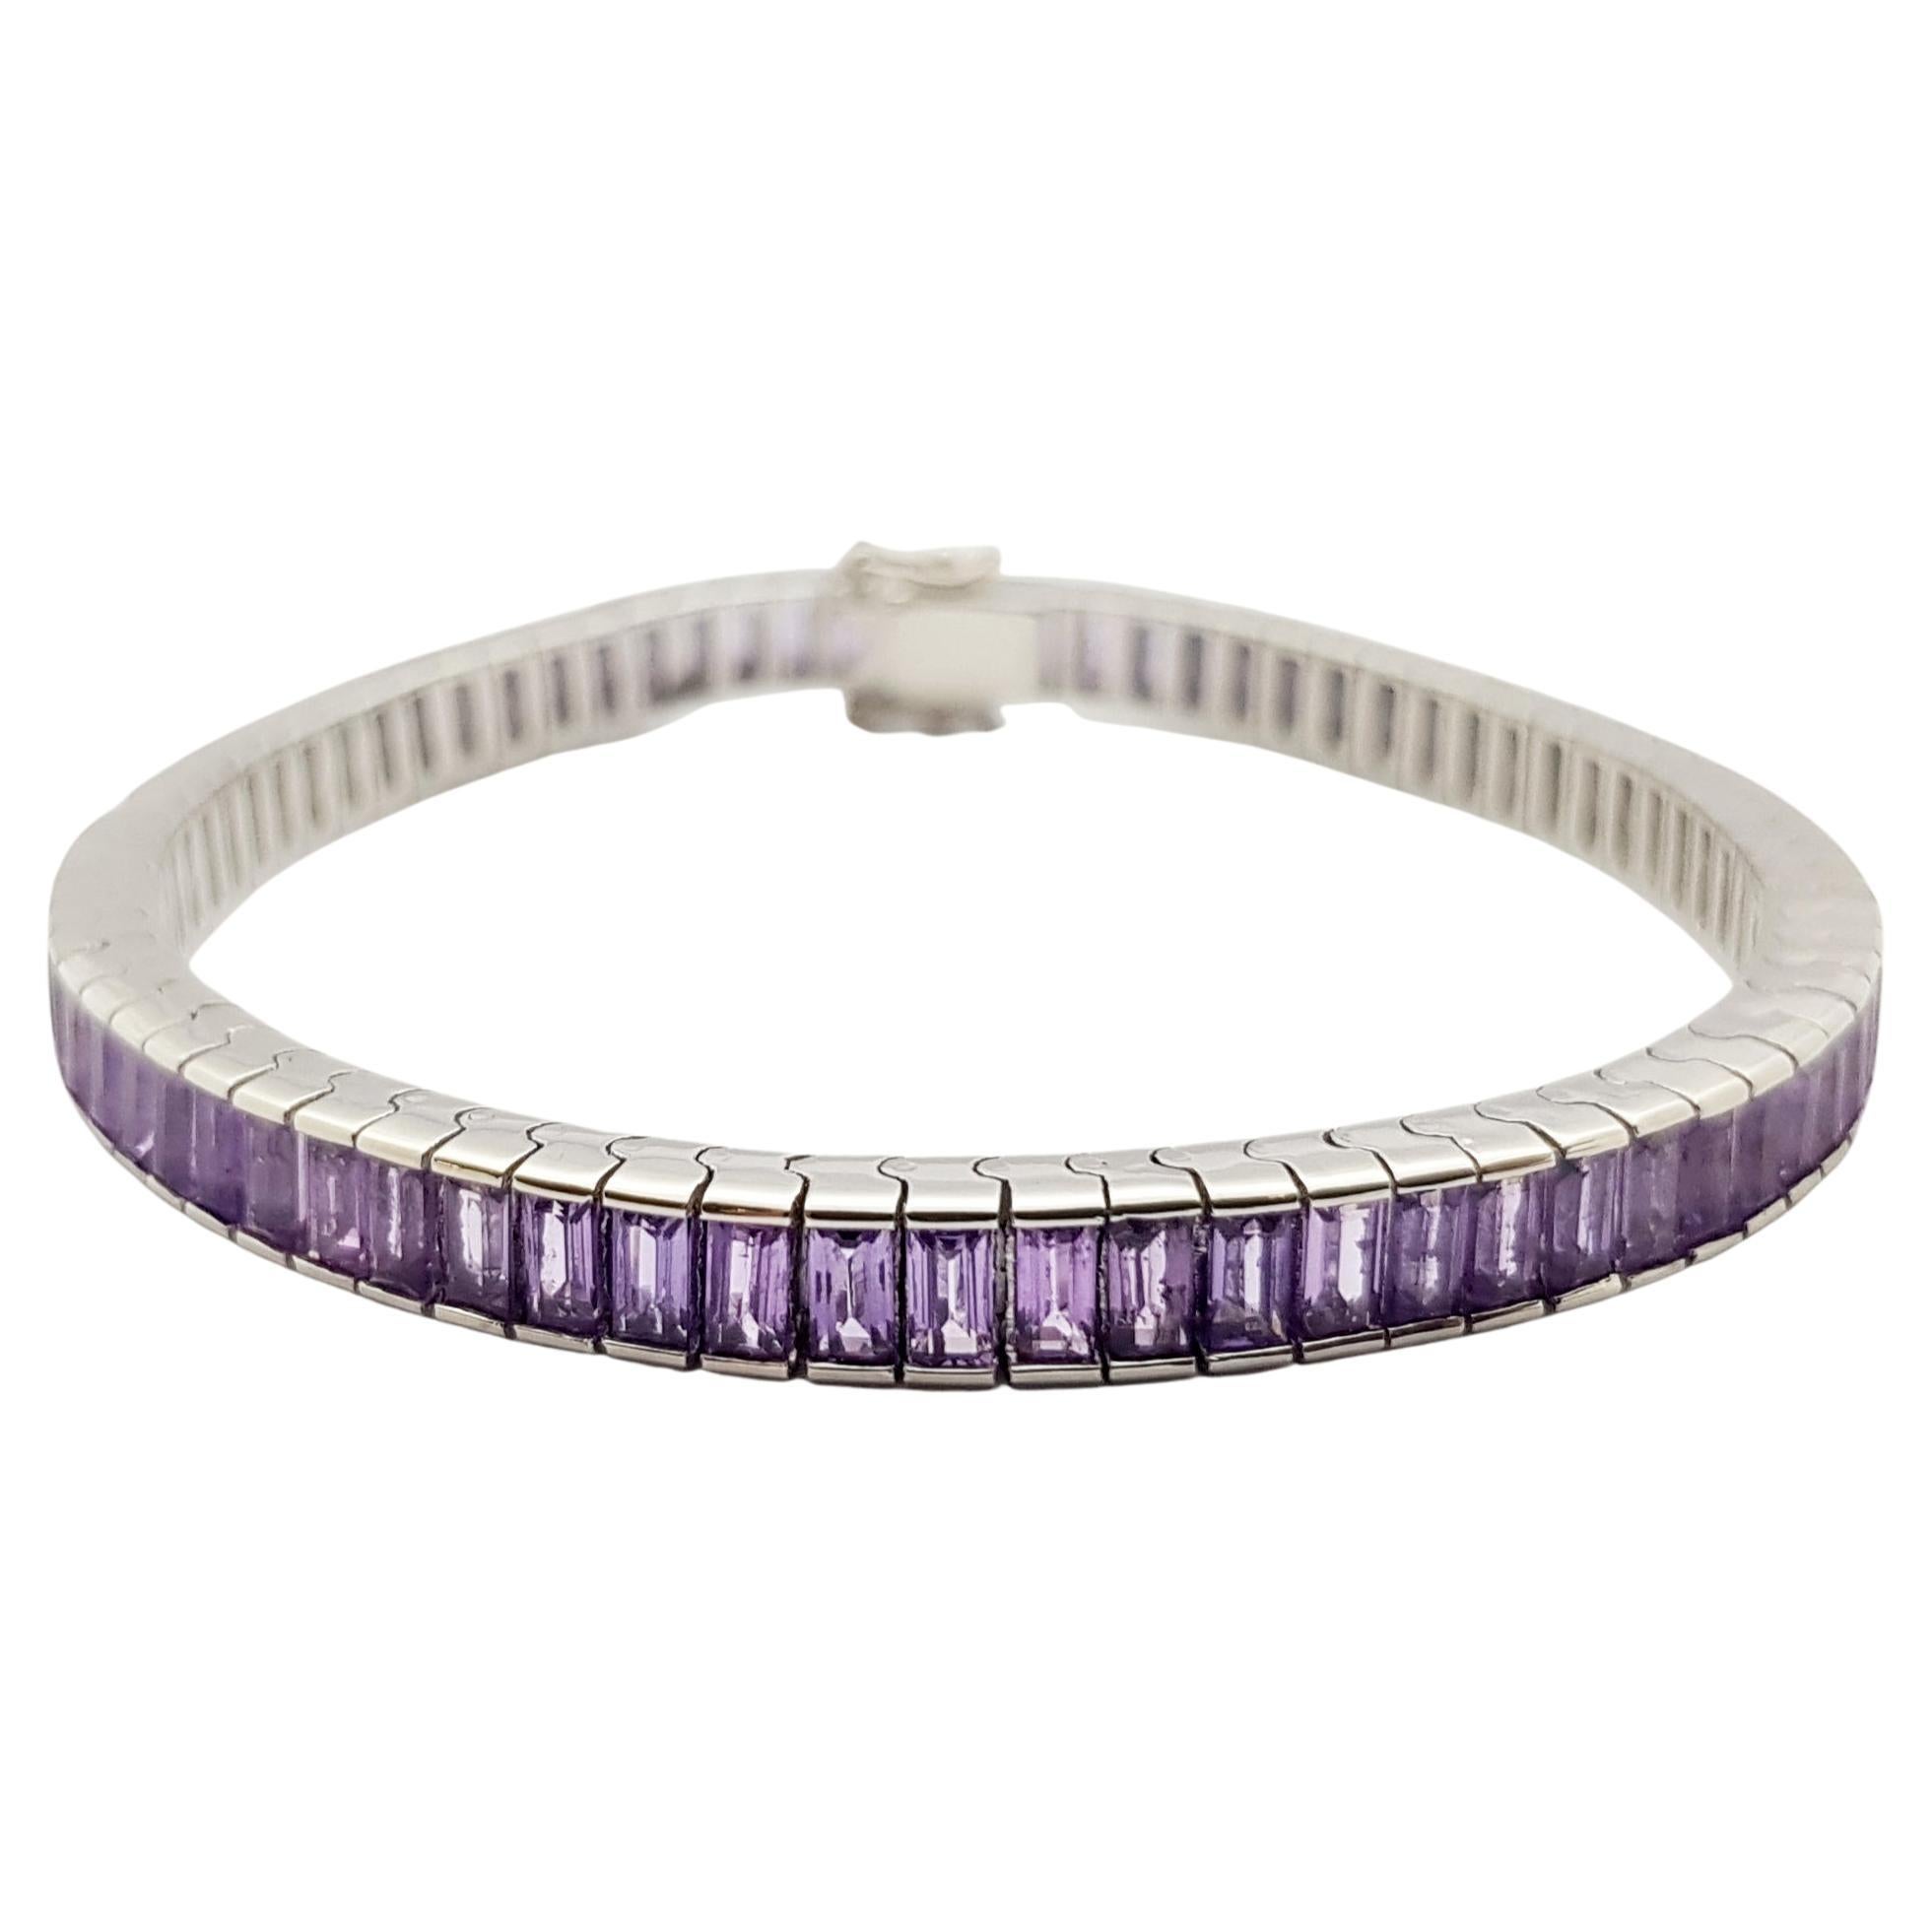 Bracelet de saphirs violets sertis dans des montures en or blanc 18 carats